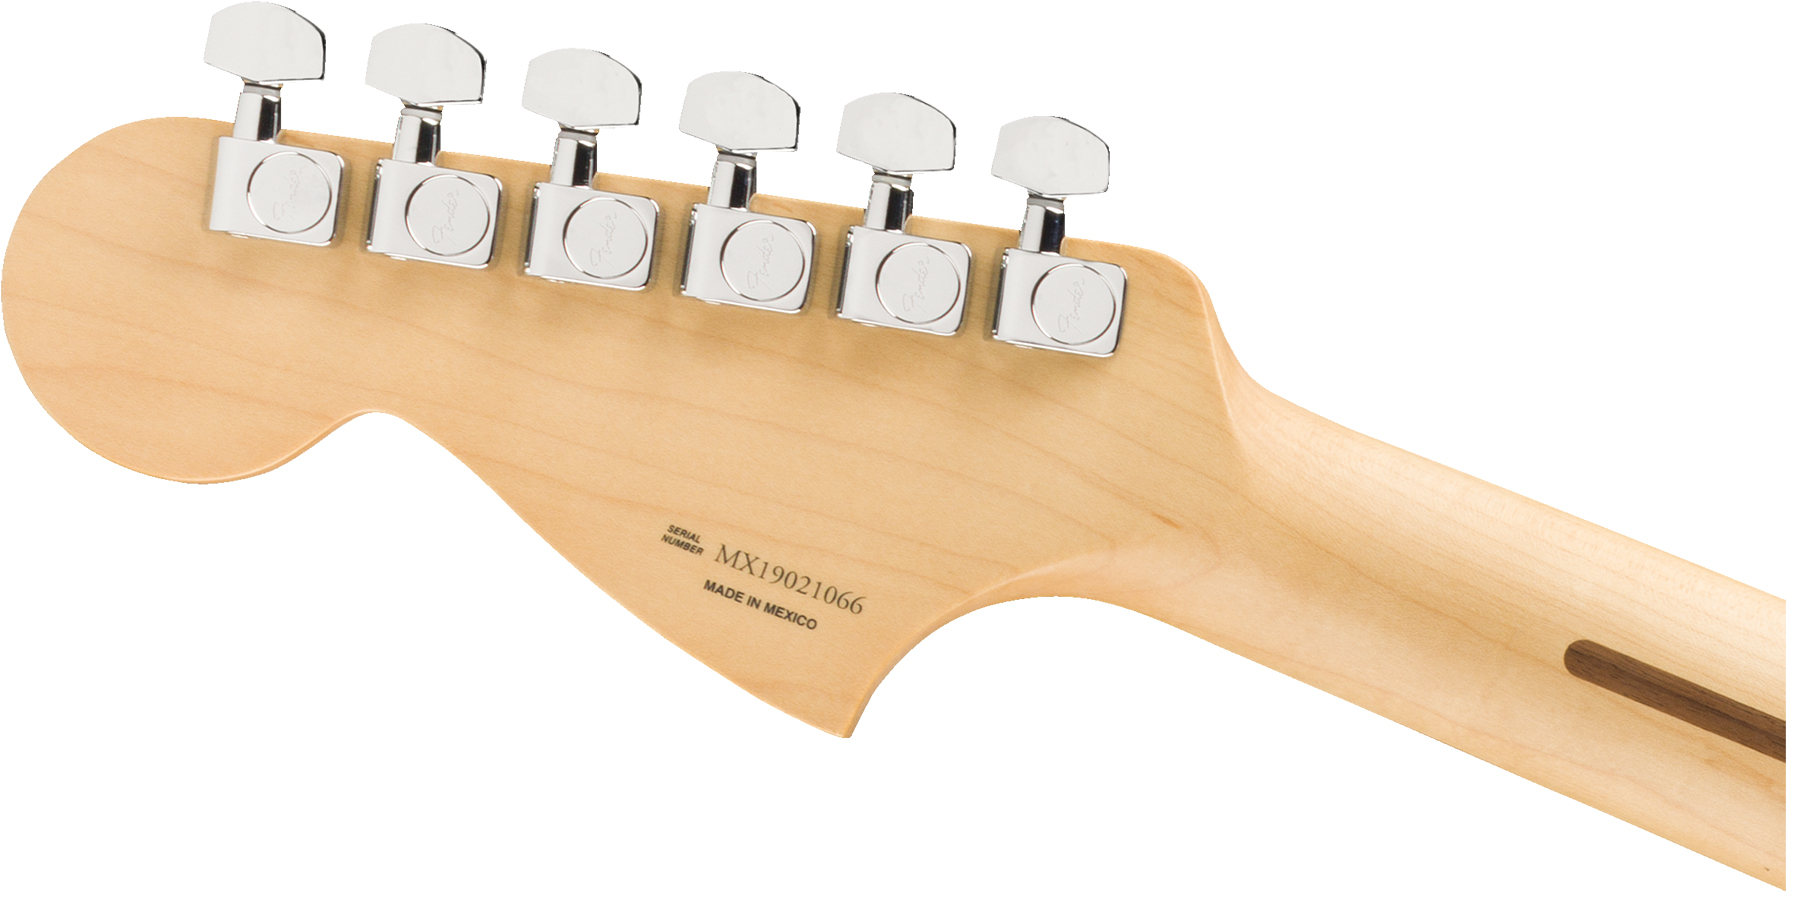 Fender Jaguar Player Mex Hs Pf - Capri Orange - Retro rock electric guitar - Variation 3